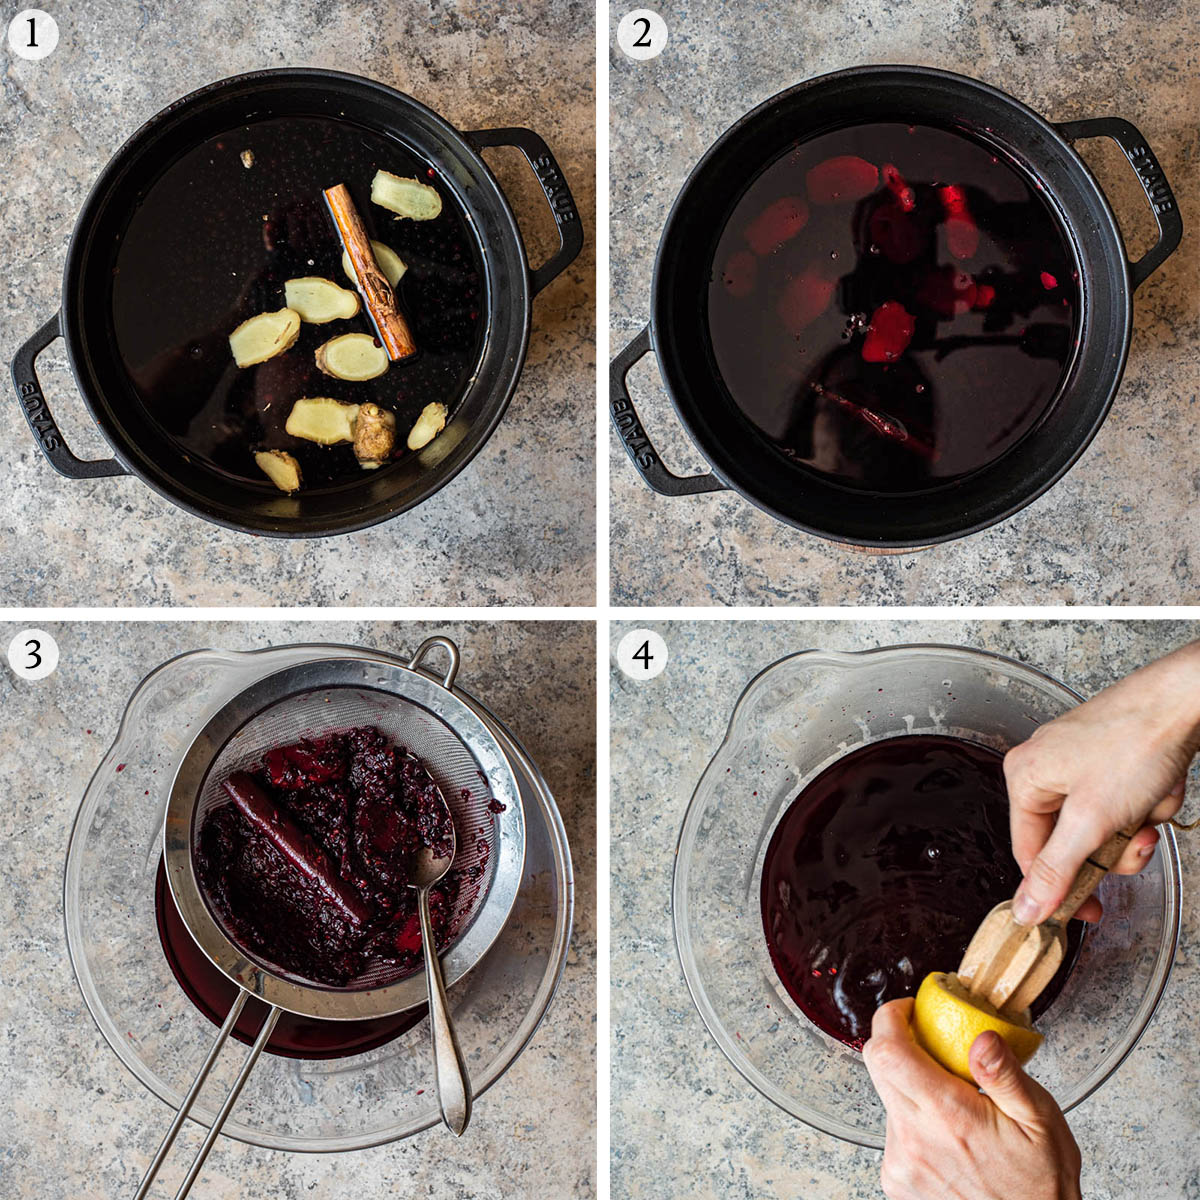 Elderberry syrup steps 1 to 4.